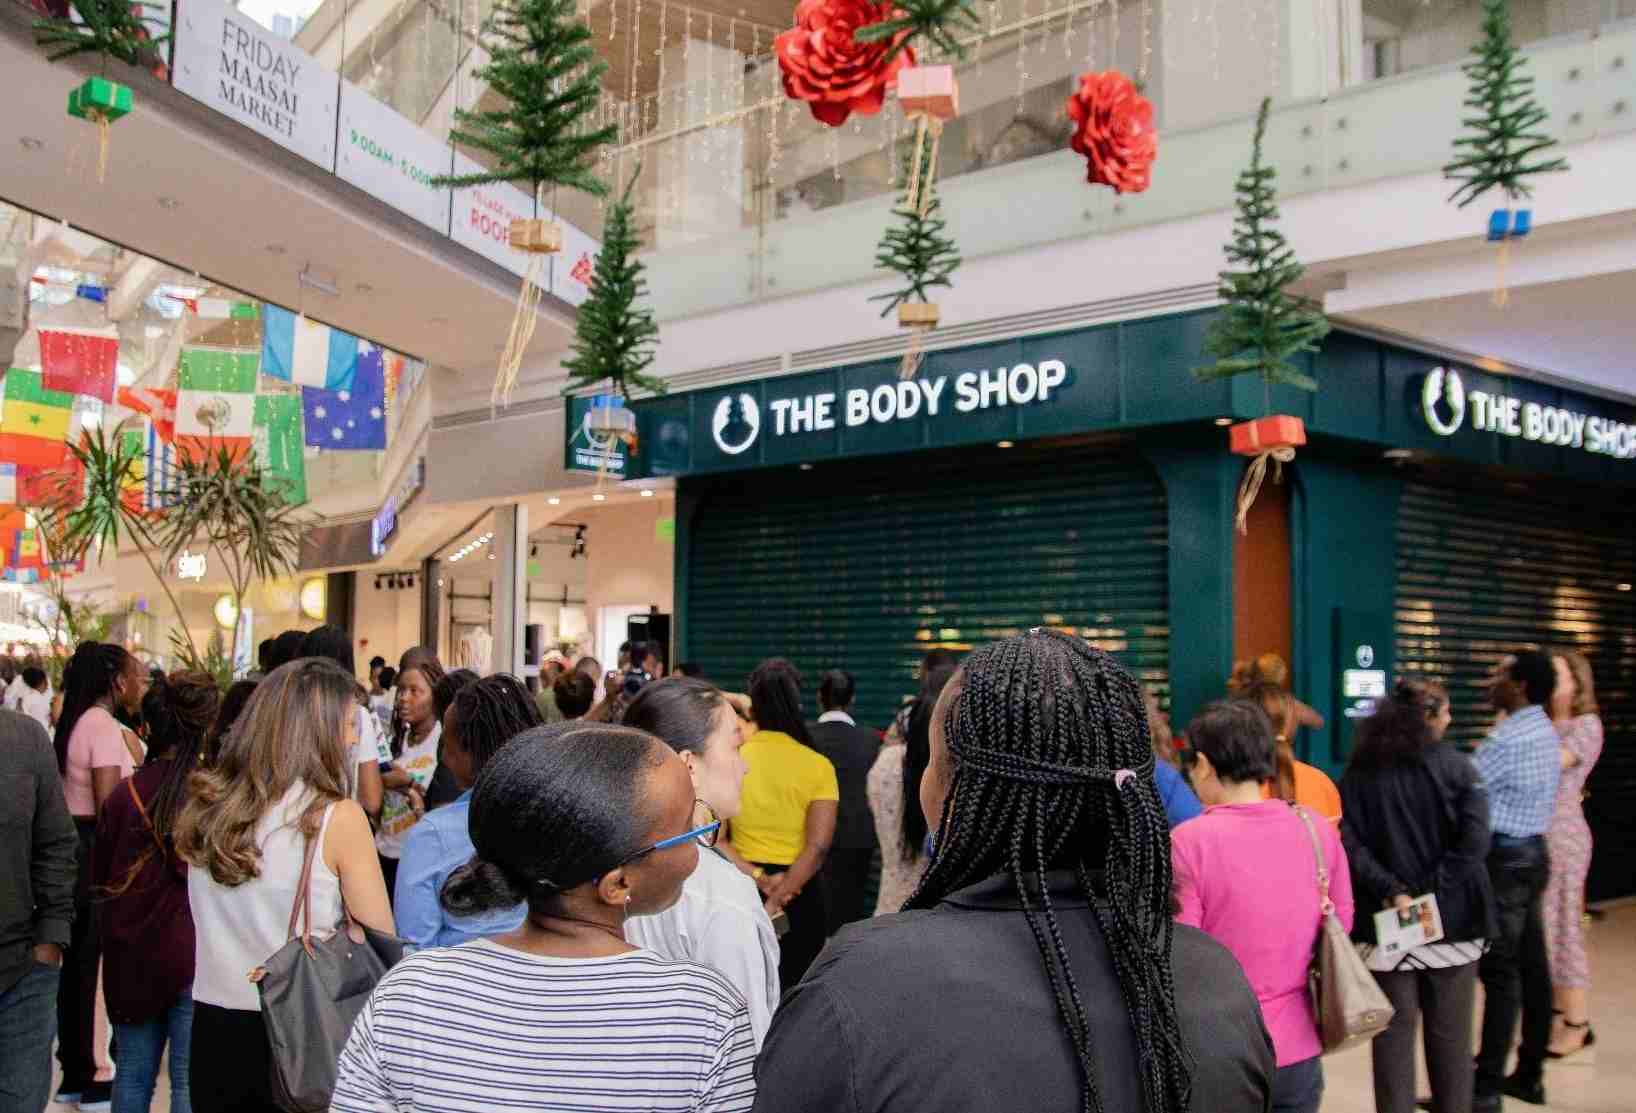 The Body Shop Kenya launch at the Village Market in Nairobi